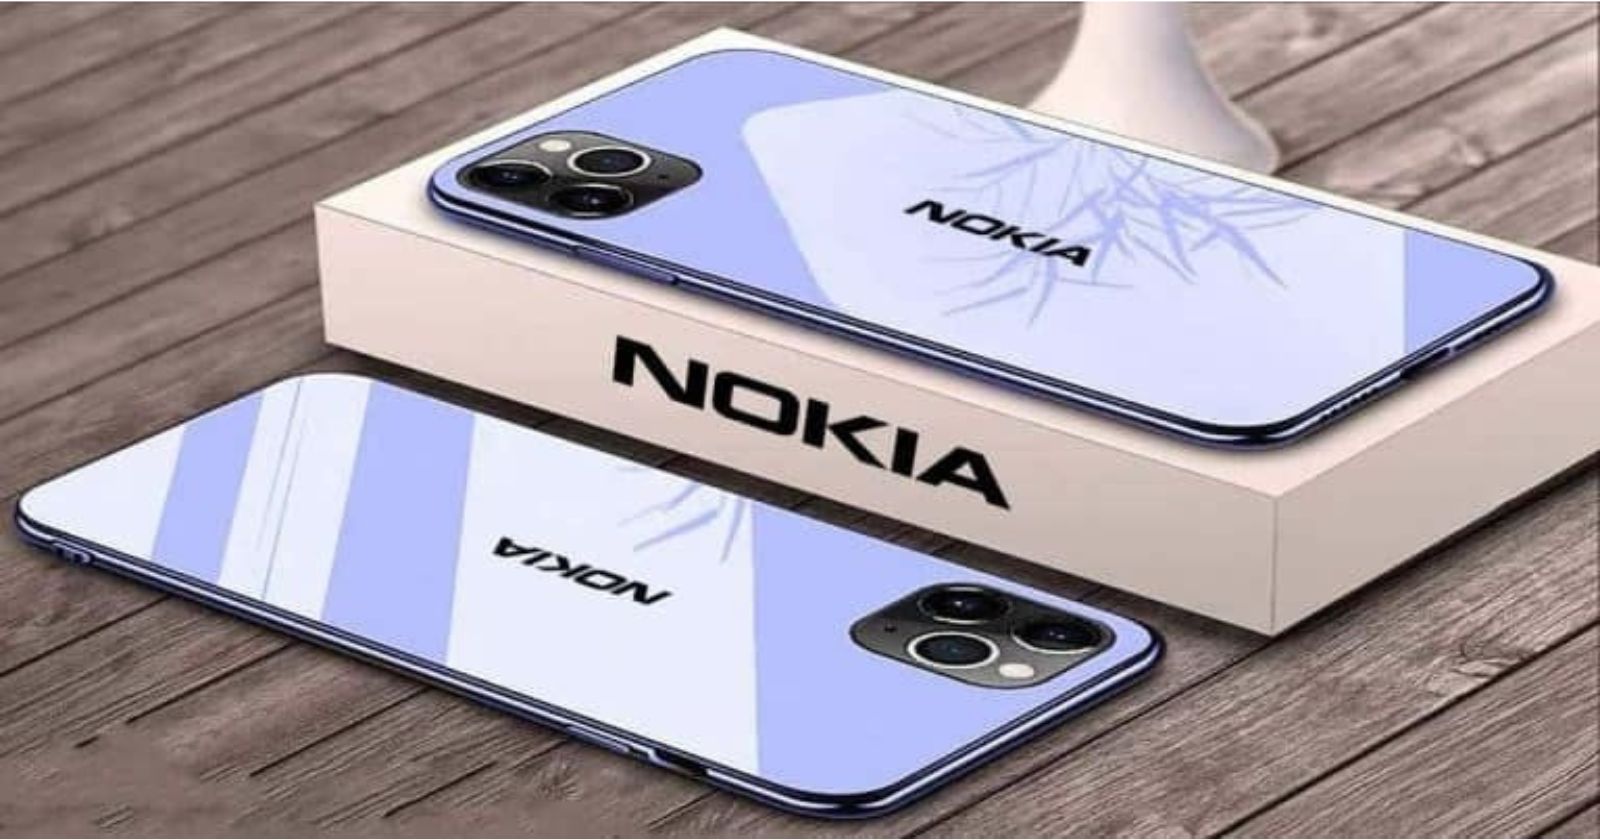 Miliki Spek Gahar Harga Terjangkau, Nokia 2300 5G Cuma 3 Jutaan! 